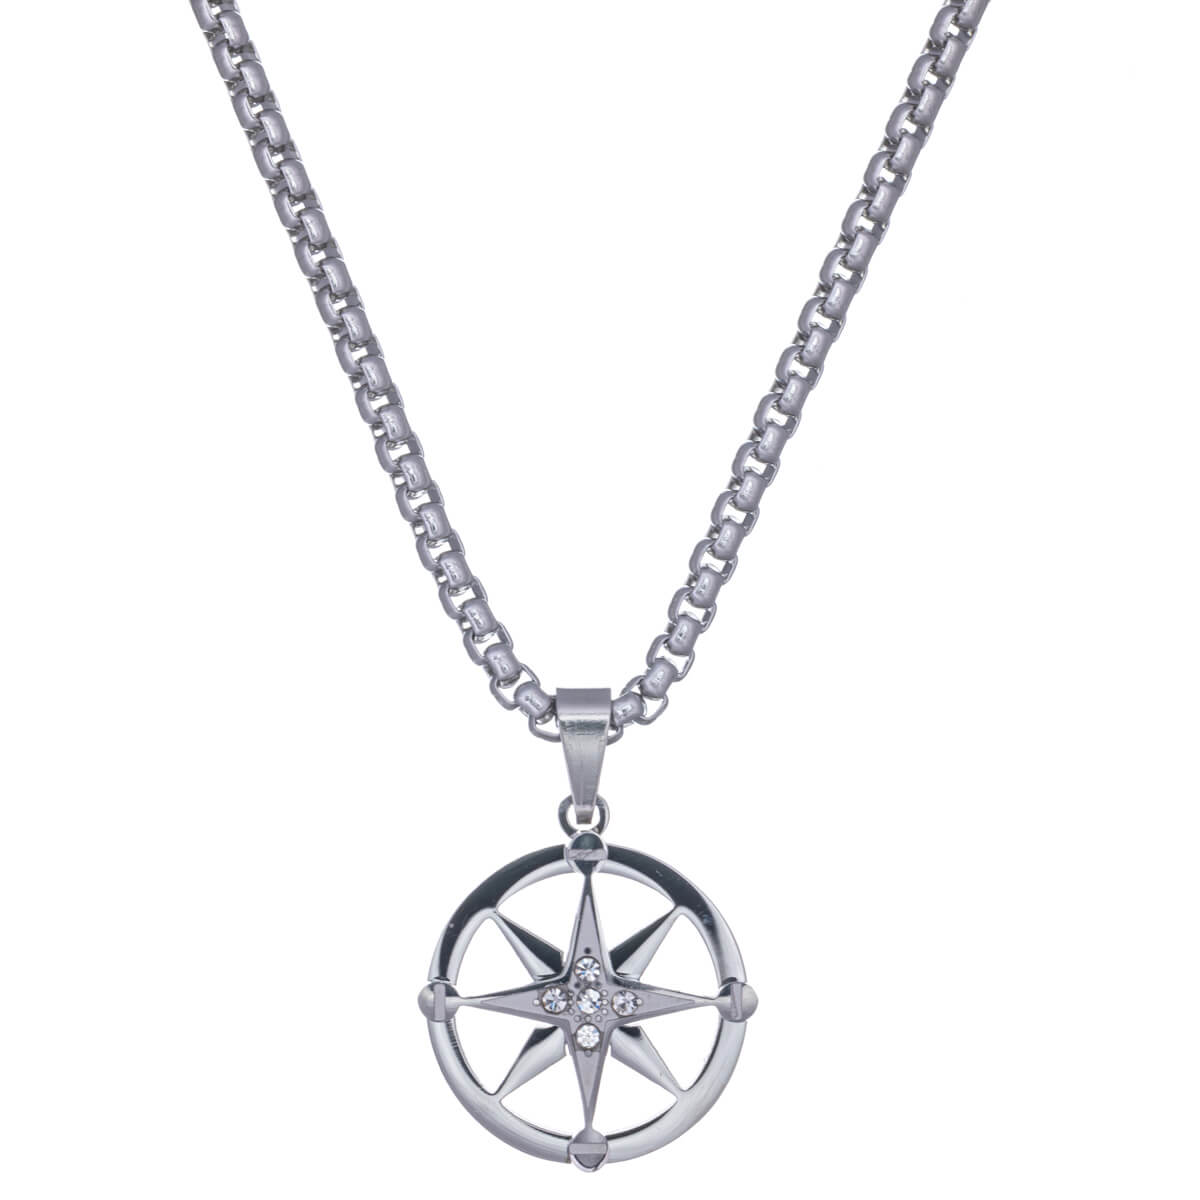 Decorative compass pendant steel necklace 60cm (steel 316L)